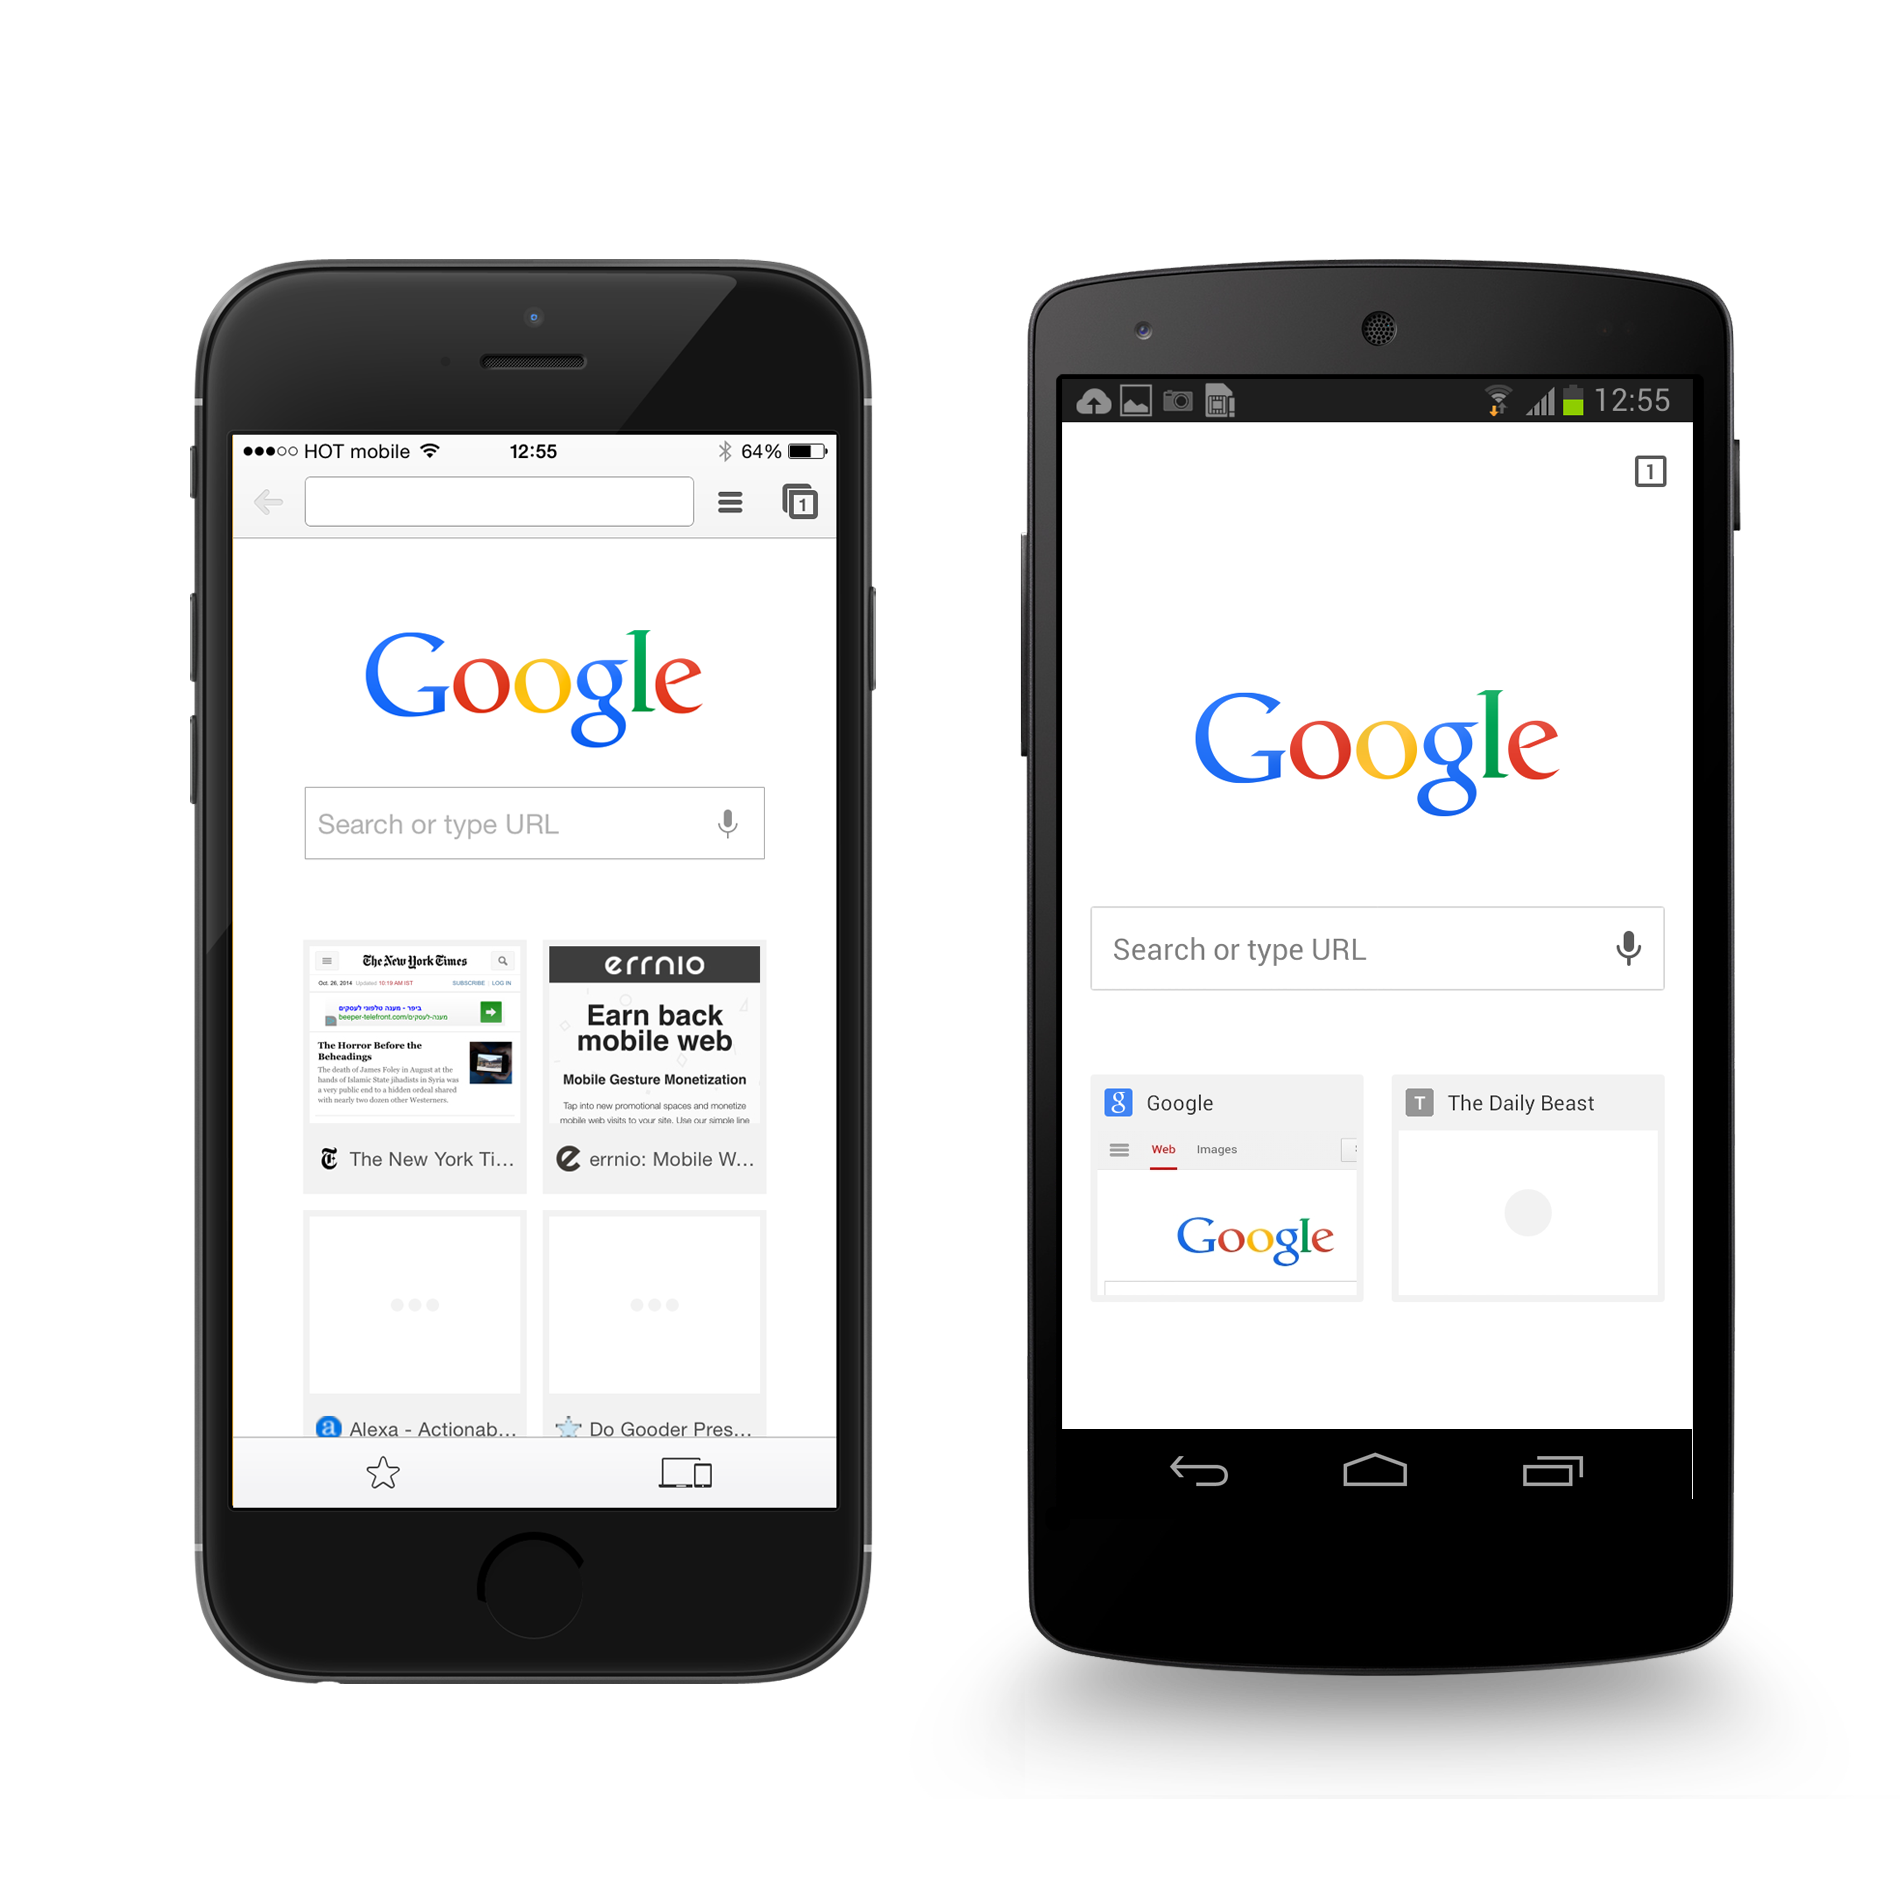 Chrome App Gestures Comparing Ios And Android By Errnio Team Errnio Mobile Interaction Medium